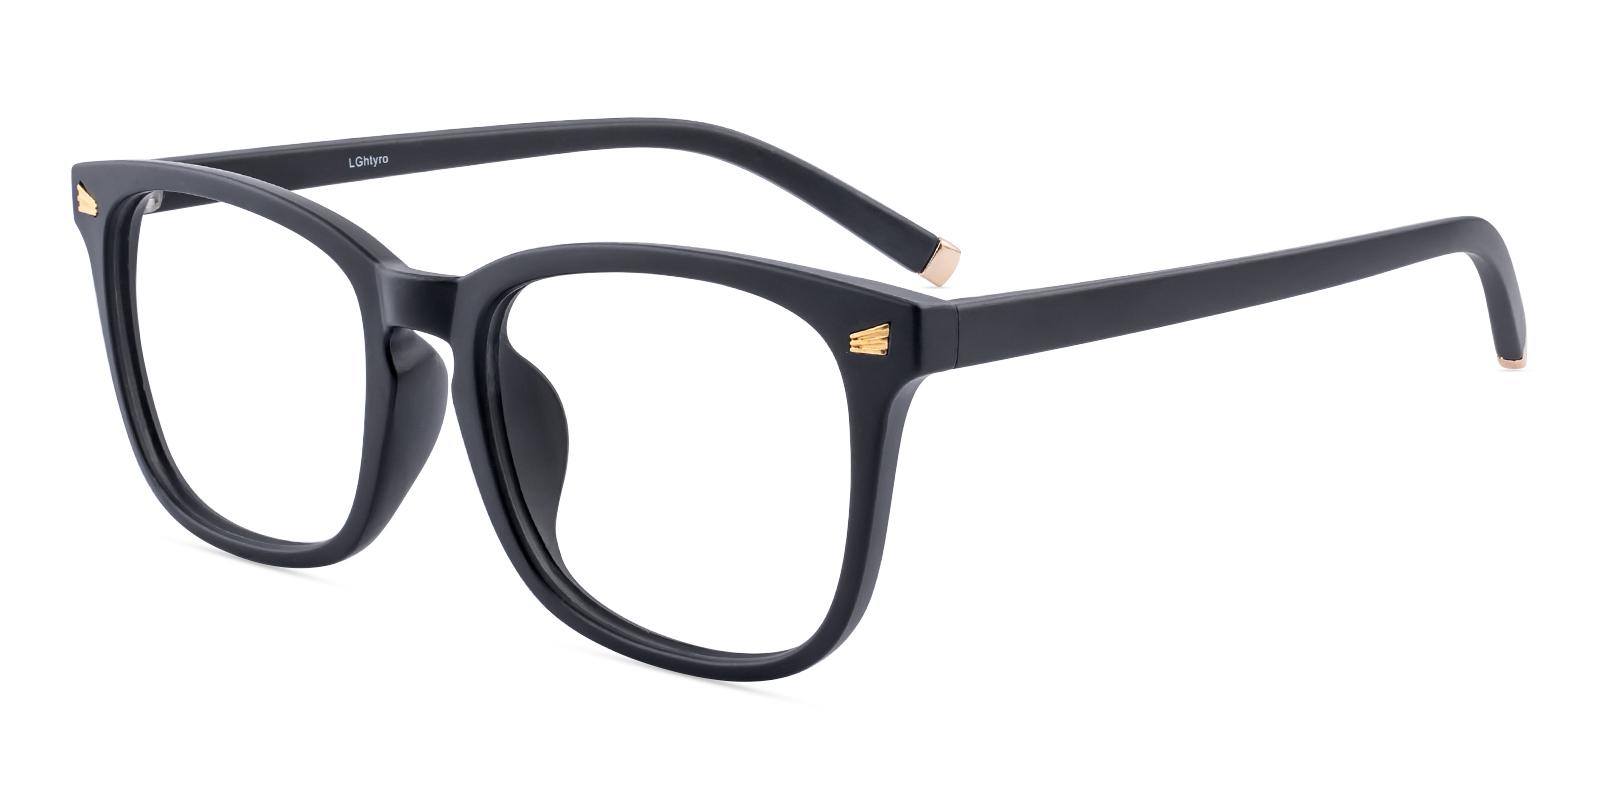 Placeine Matte-black Plastic Eyeglasses , UniversalBridgeFit Frames from ABBE Glasses